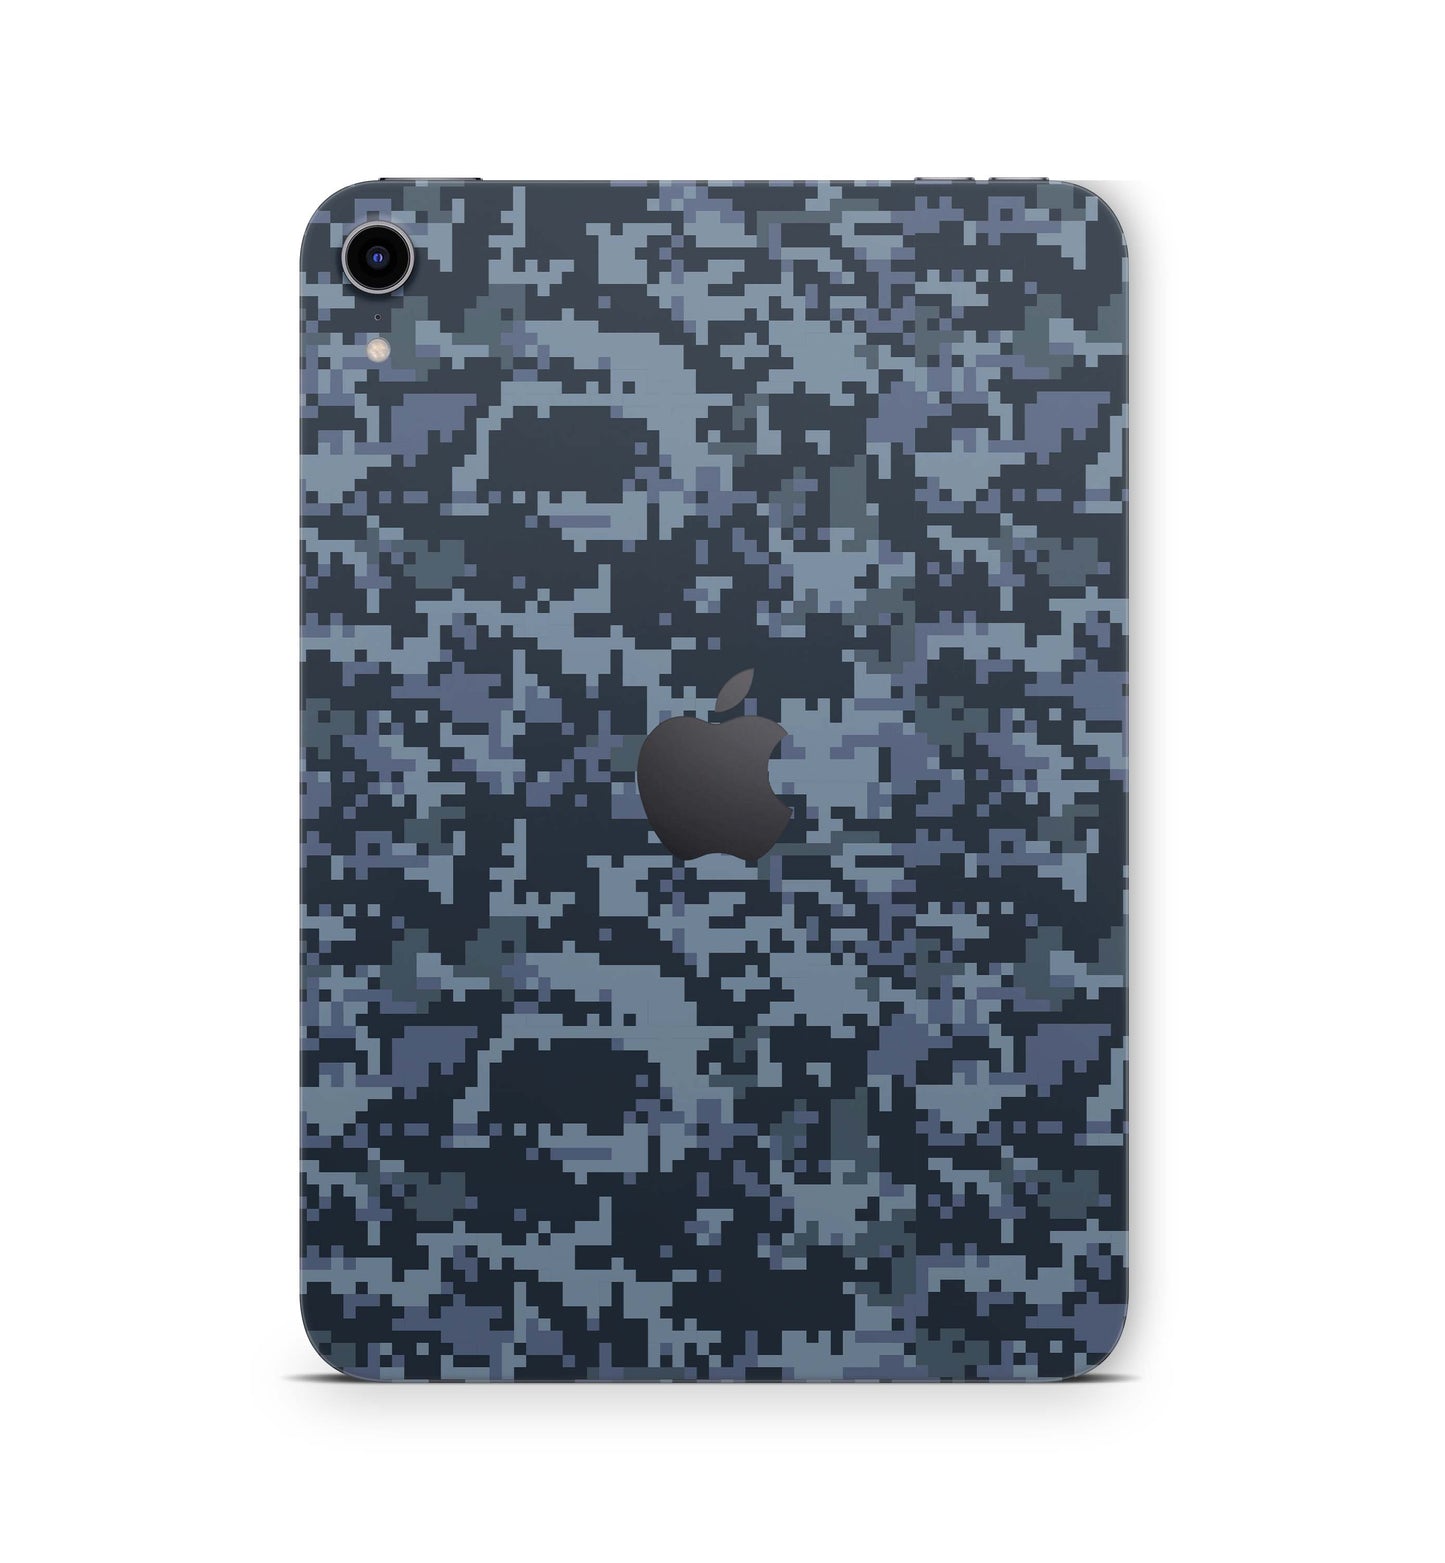 Apple iPad Skin Design Cover Folie Vinyl Skins & Wraps für alle iPad Modelle Aufkleber Skins4u Navy-Camo  